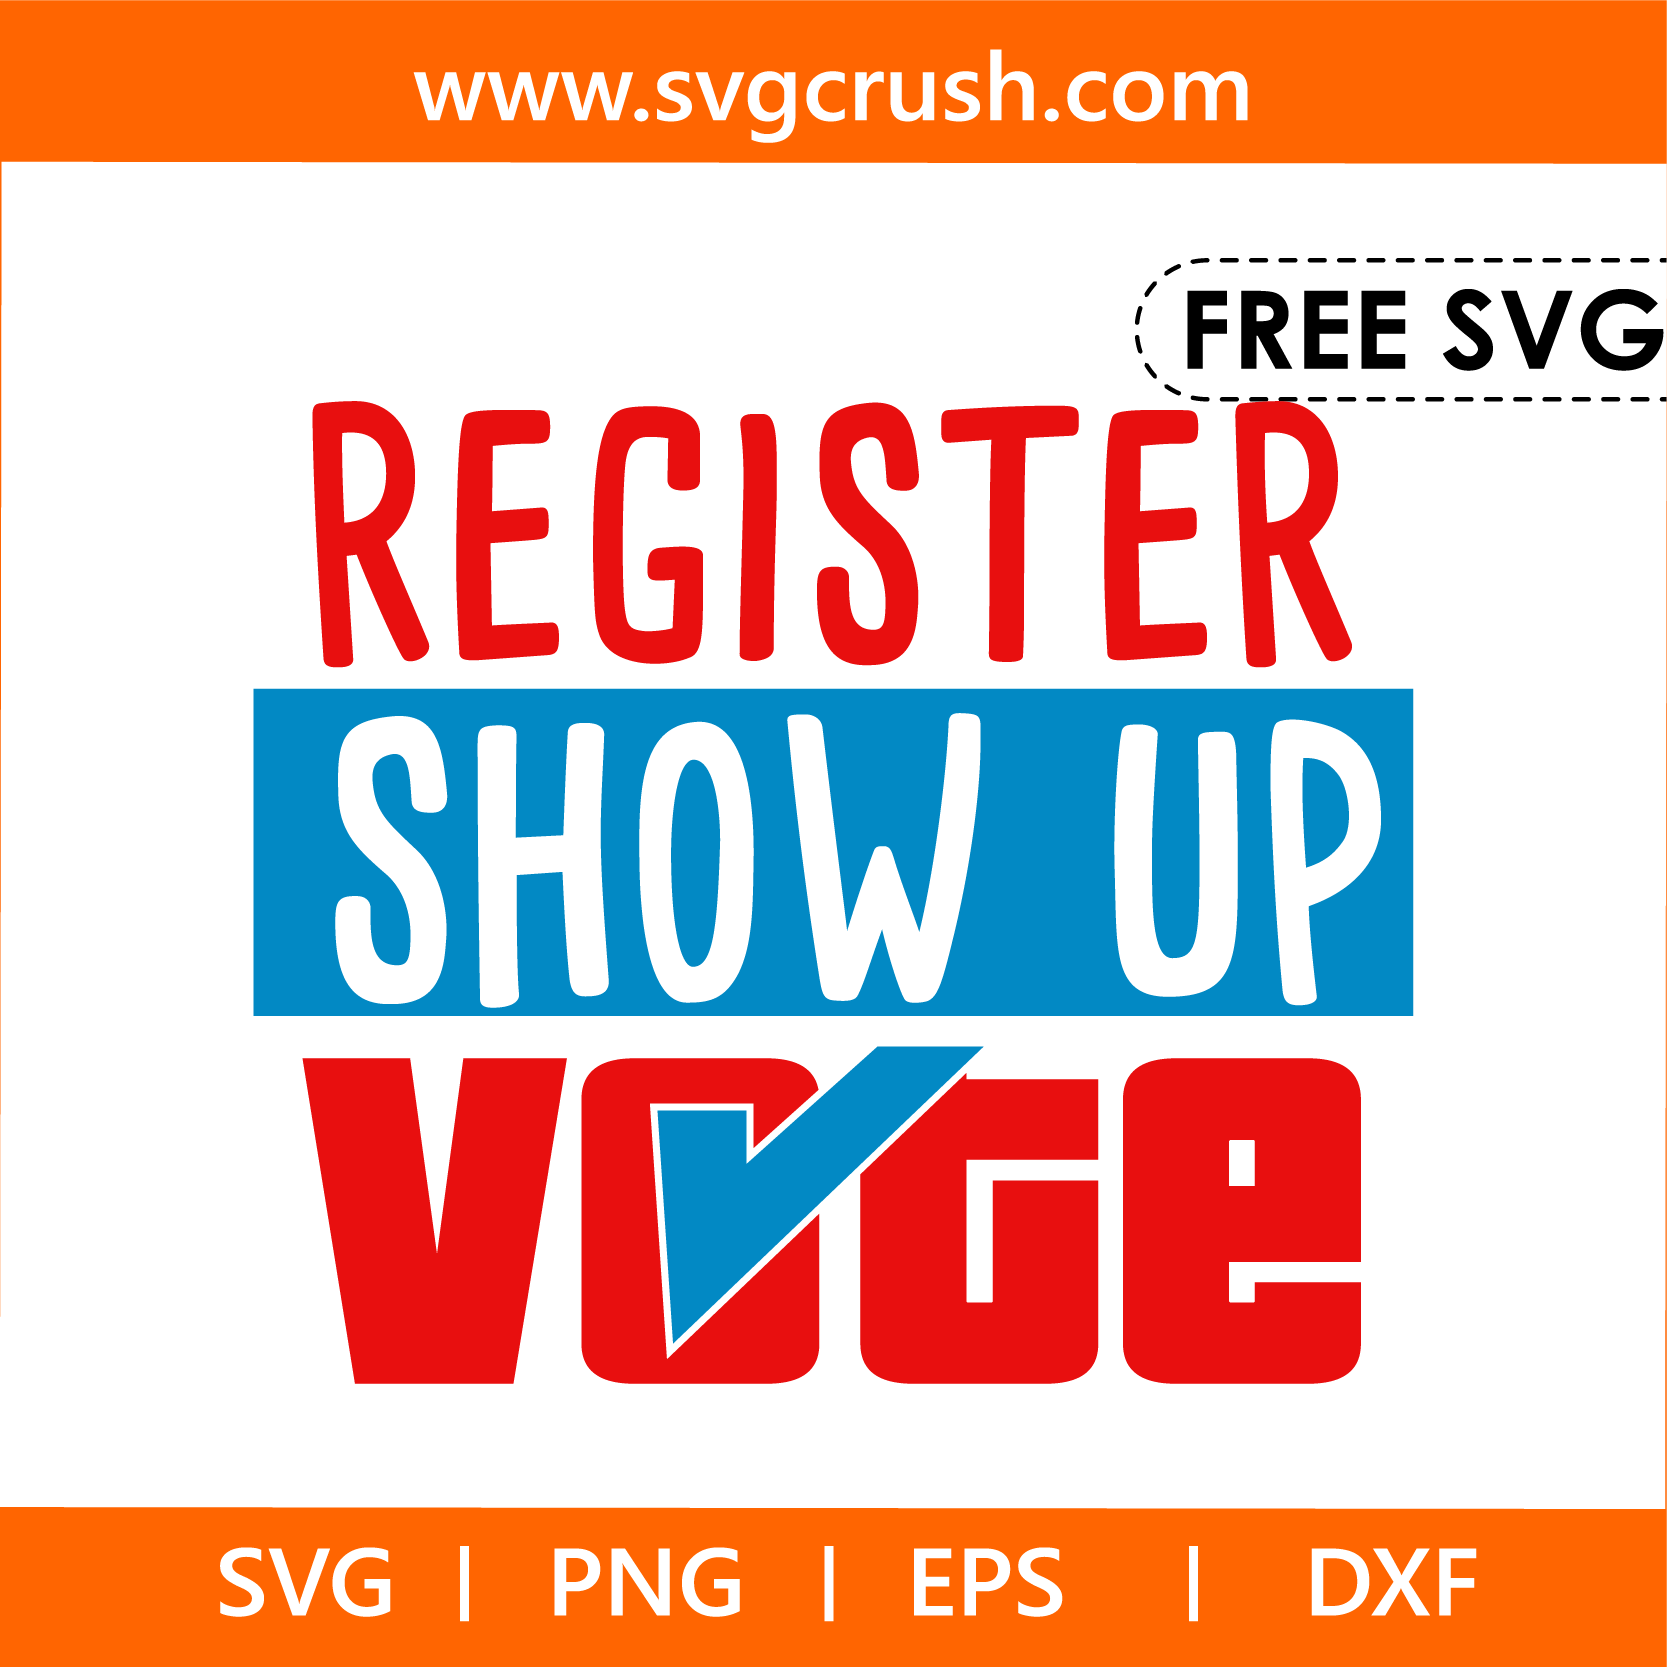 free register-show-up-vote-005 svg